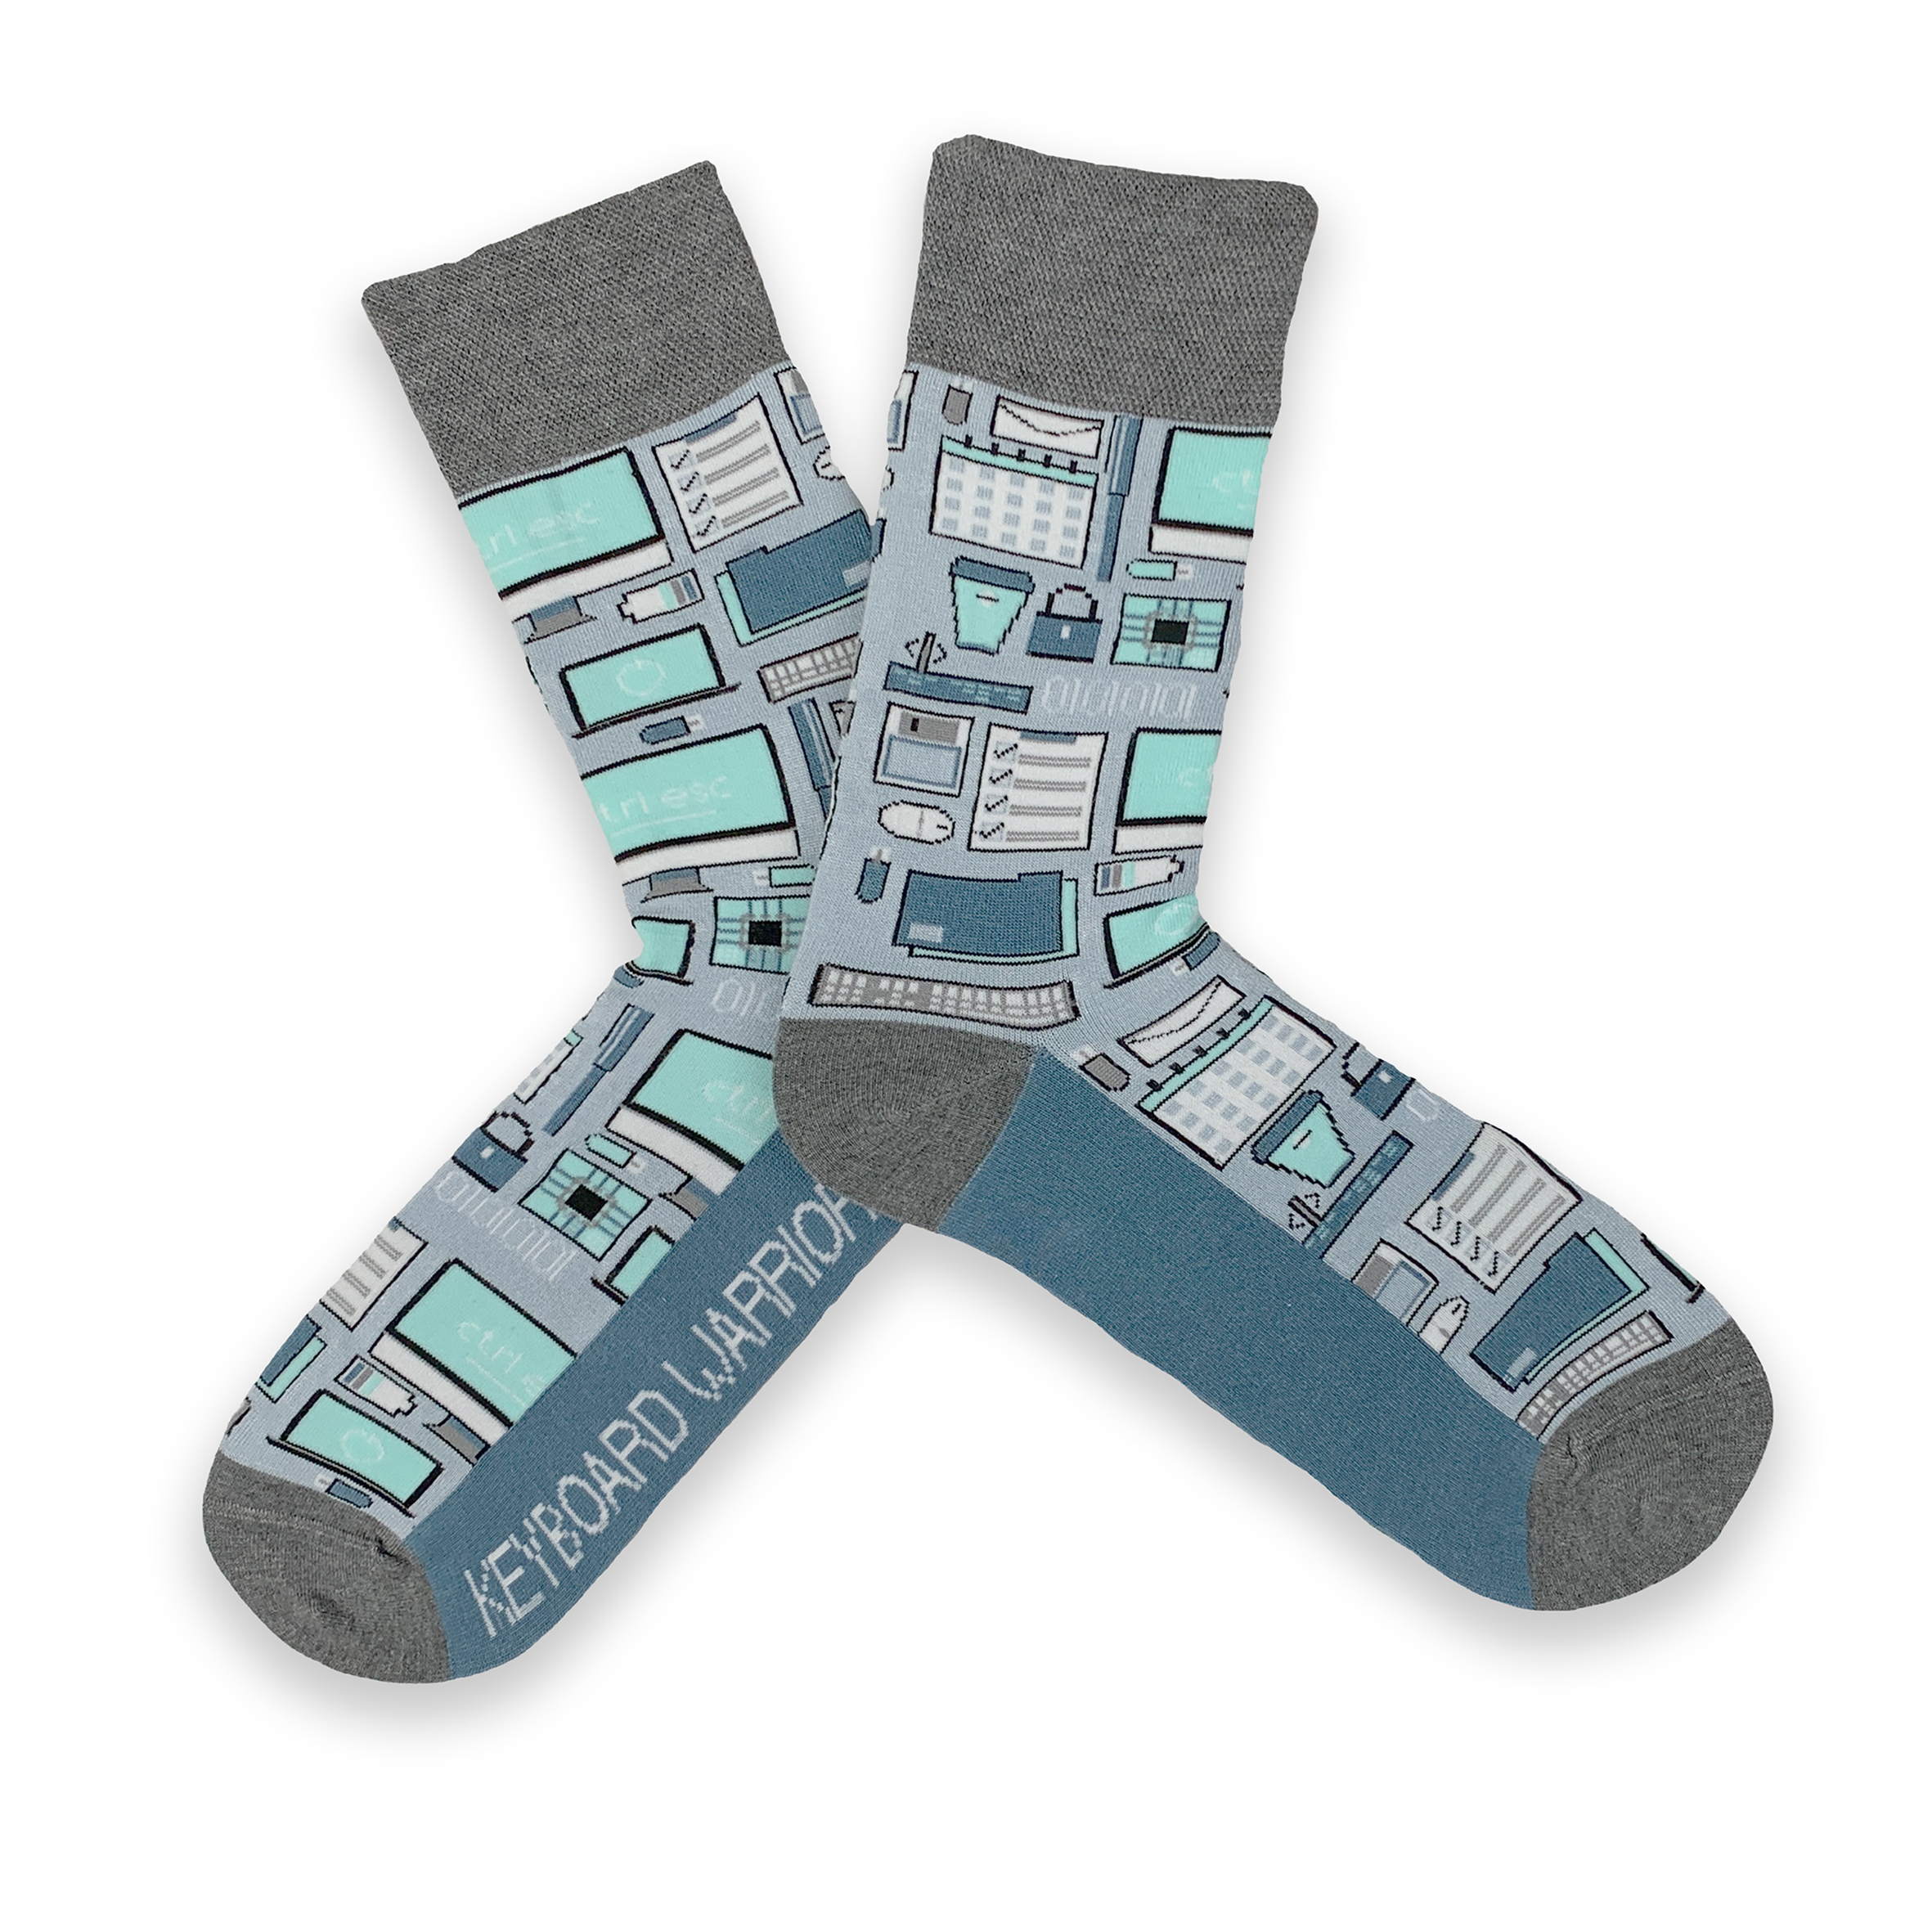 IT computer programmer bamboo socks gift